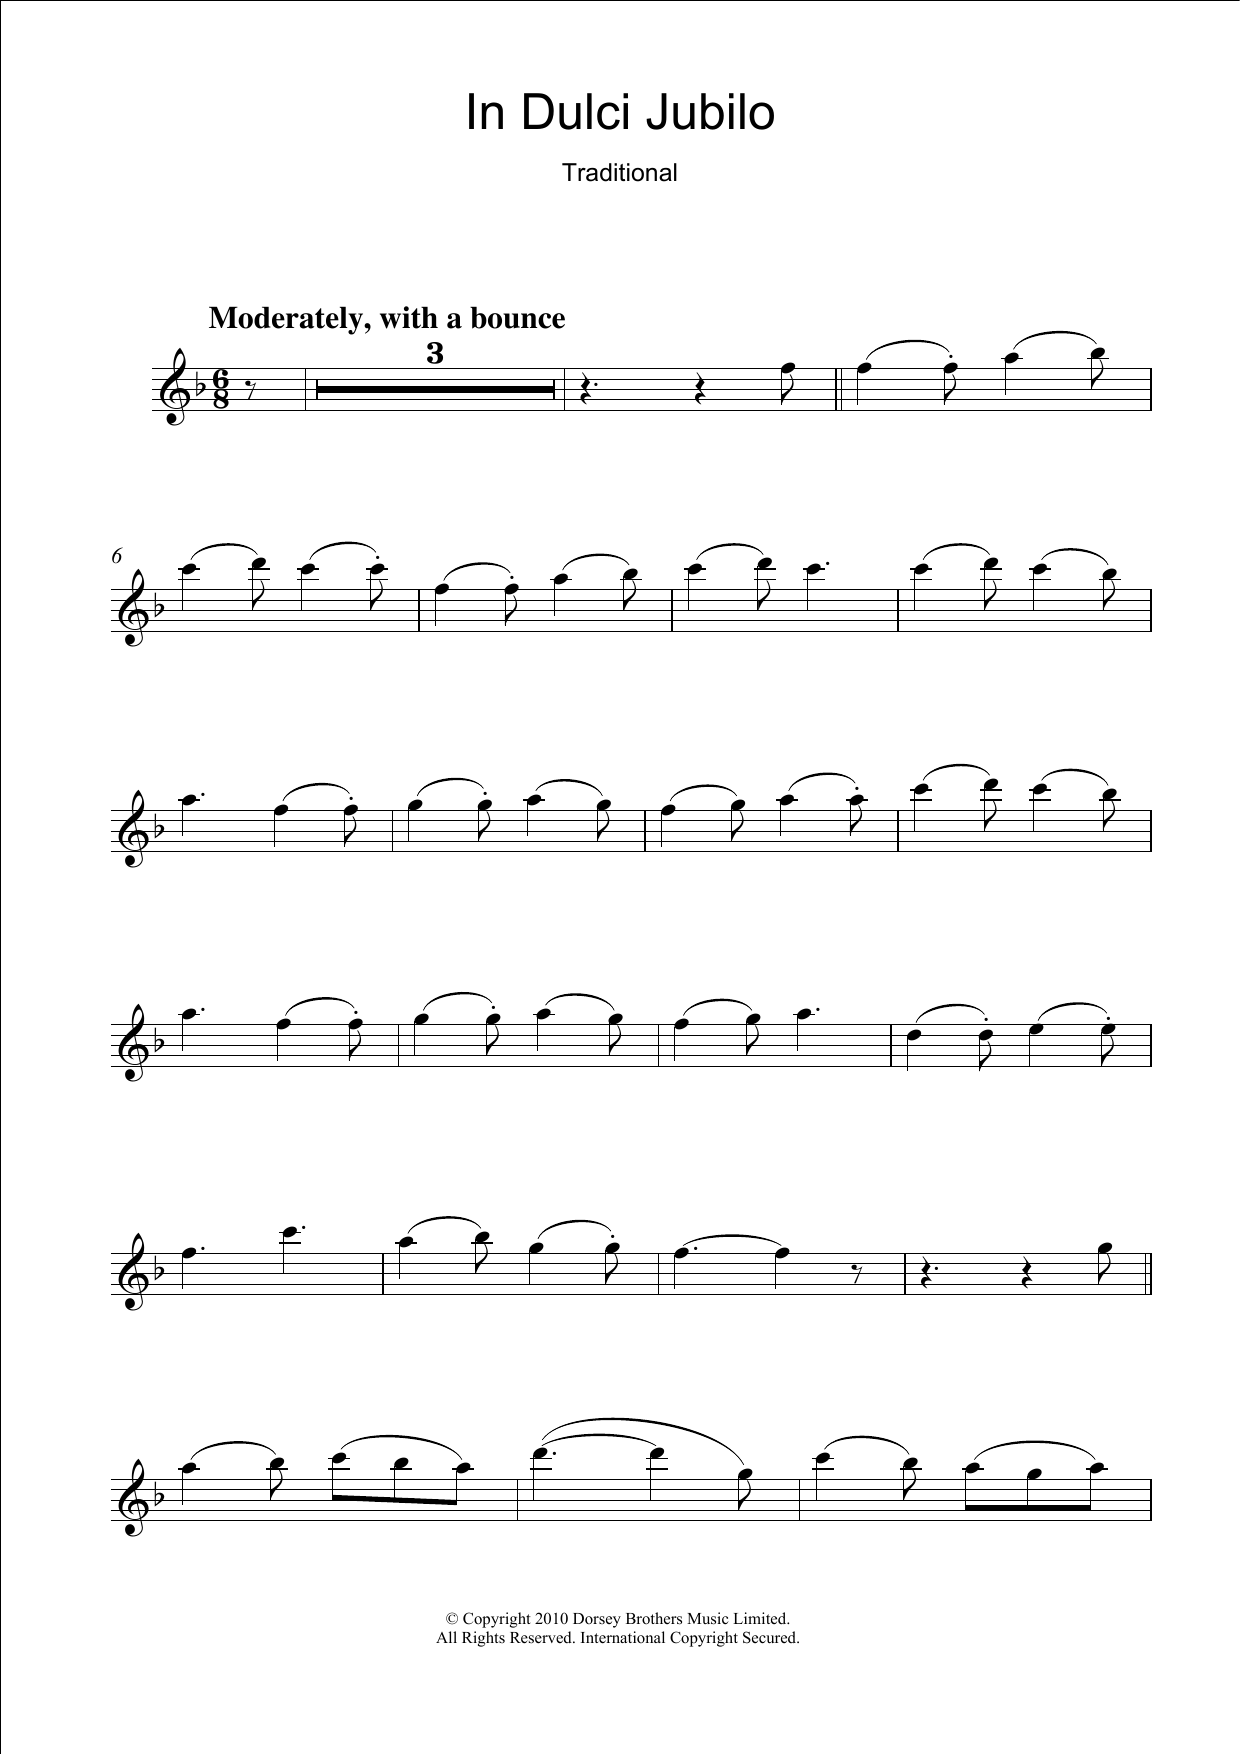 Traditional Carol In Dulci Jubilo sheet music notes and chords arranged for Guitar Chords/Lyrics